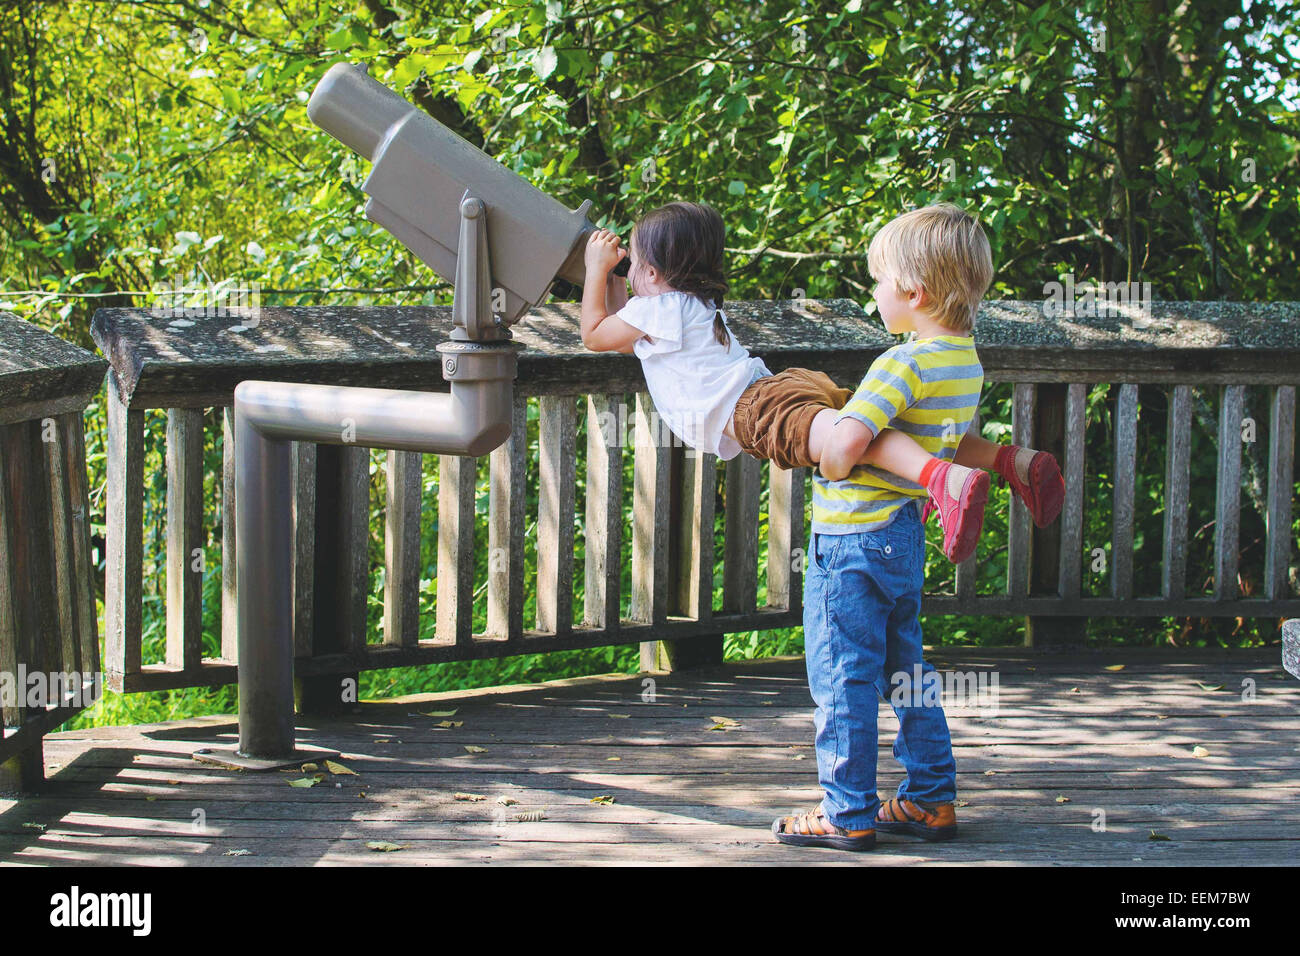 Young boy (4-5) helping girl (2-3) looking through telescope Stock Photo